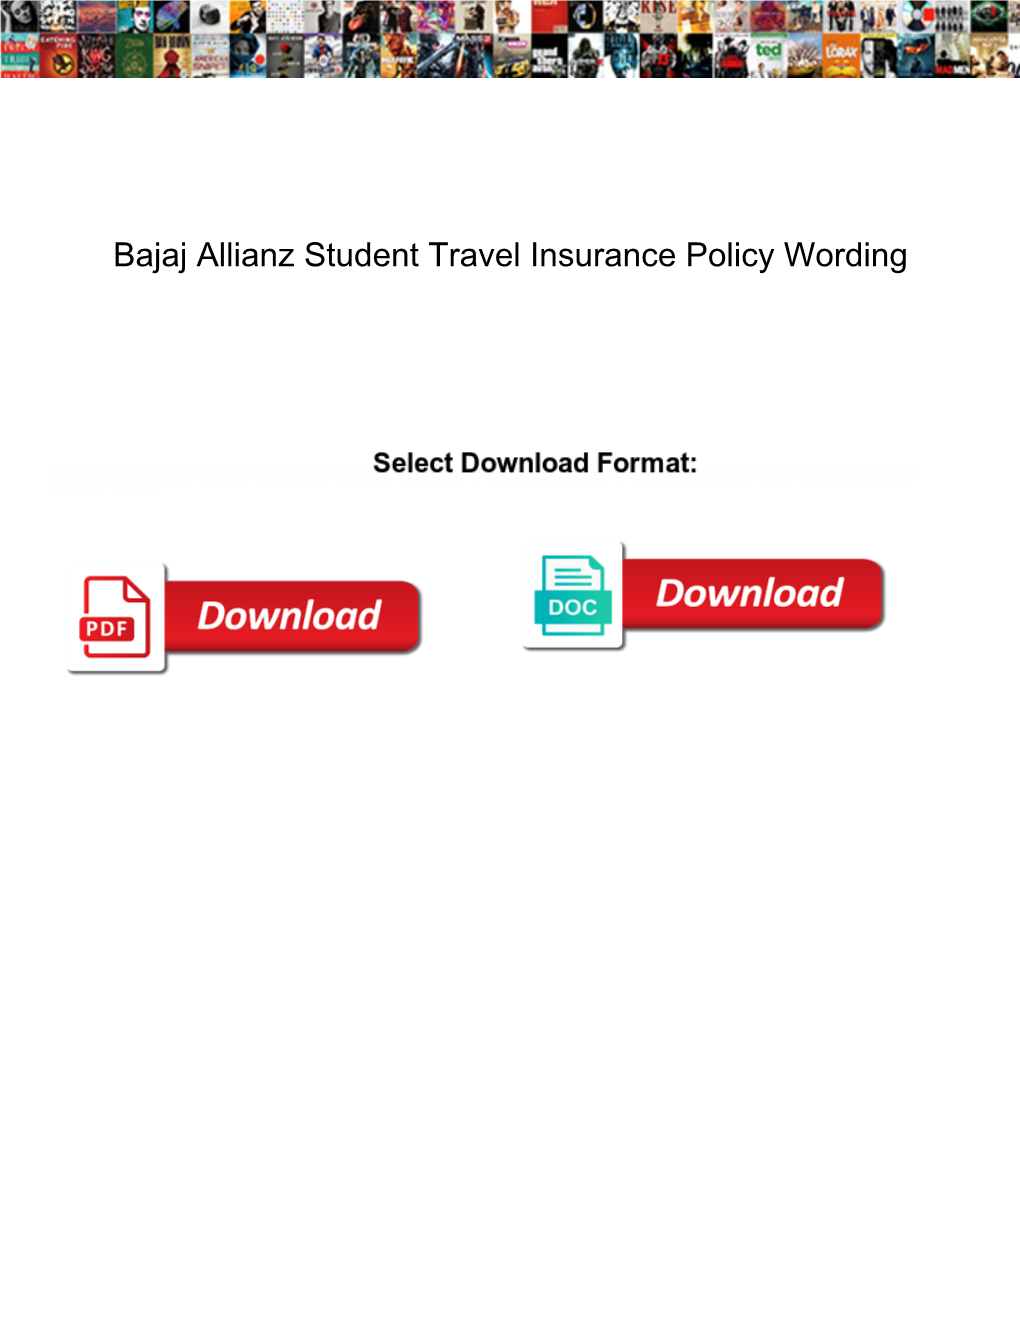 Bajaj Allianz Student Travel Insurance Policy Wording